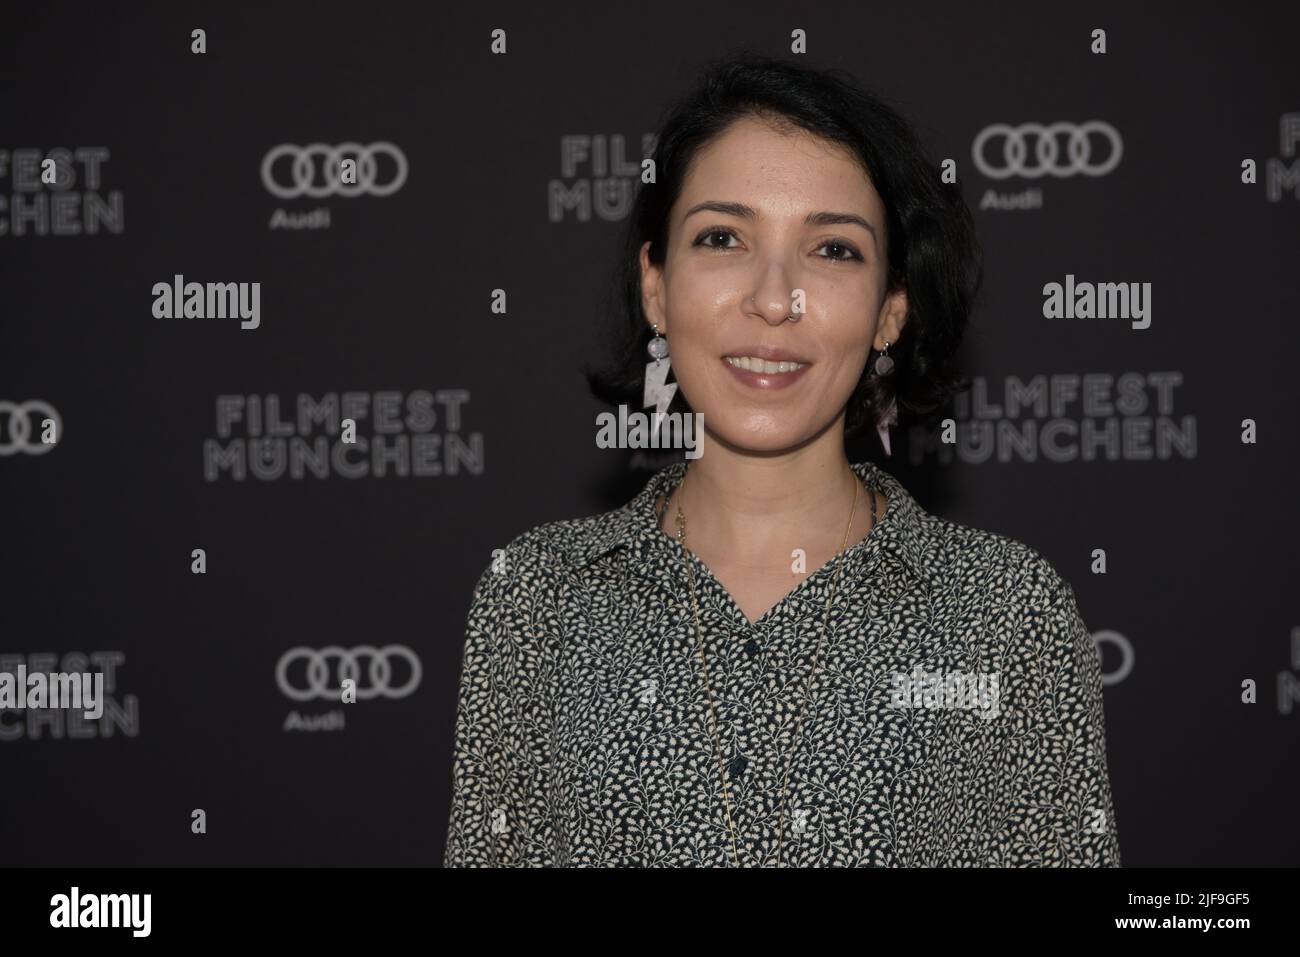 La directora Anita Rocha da Silveira fue vista ante la pantalla DE SU película MEDUSA durante 39. Filmfest München im City Kino am 25.6.2022 Foto de stock